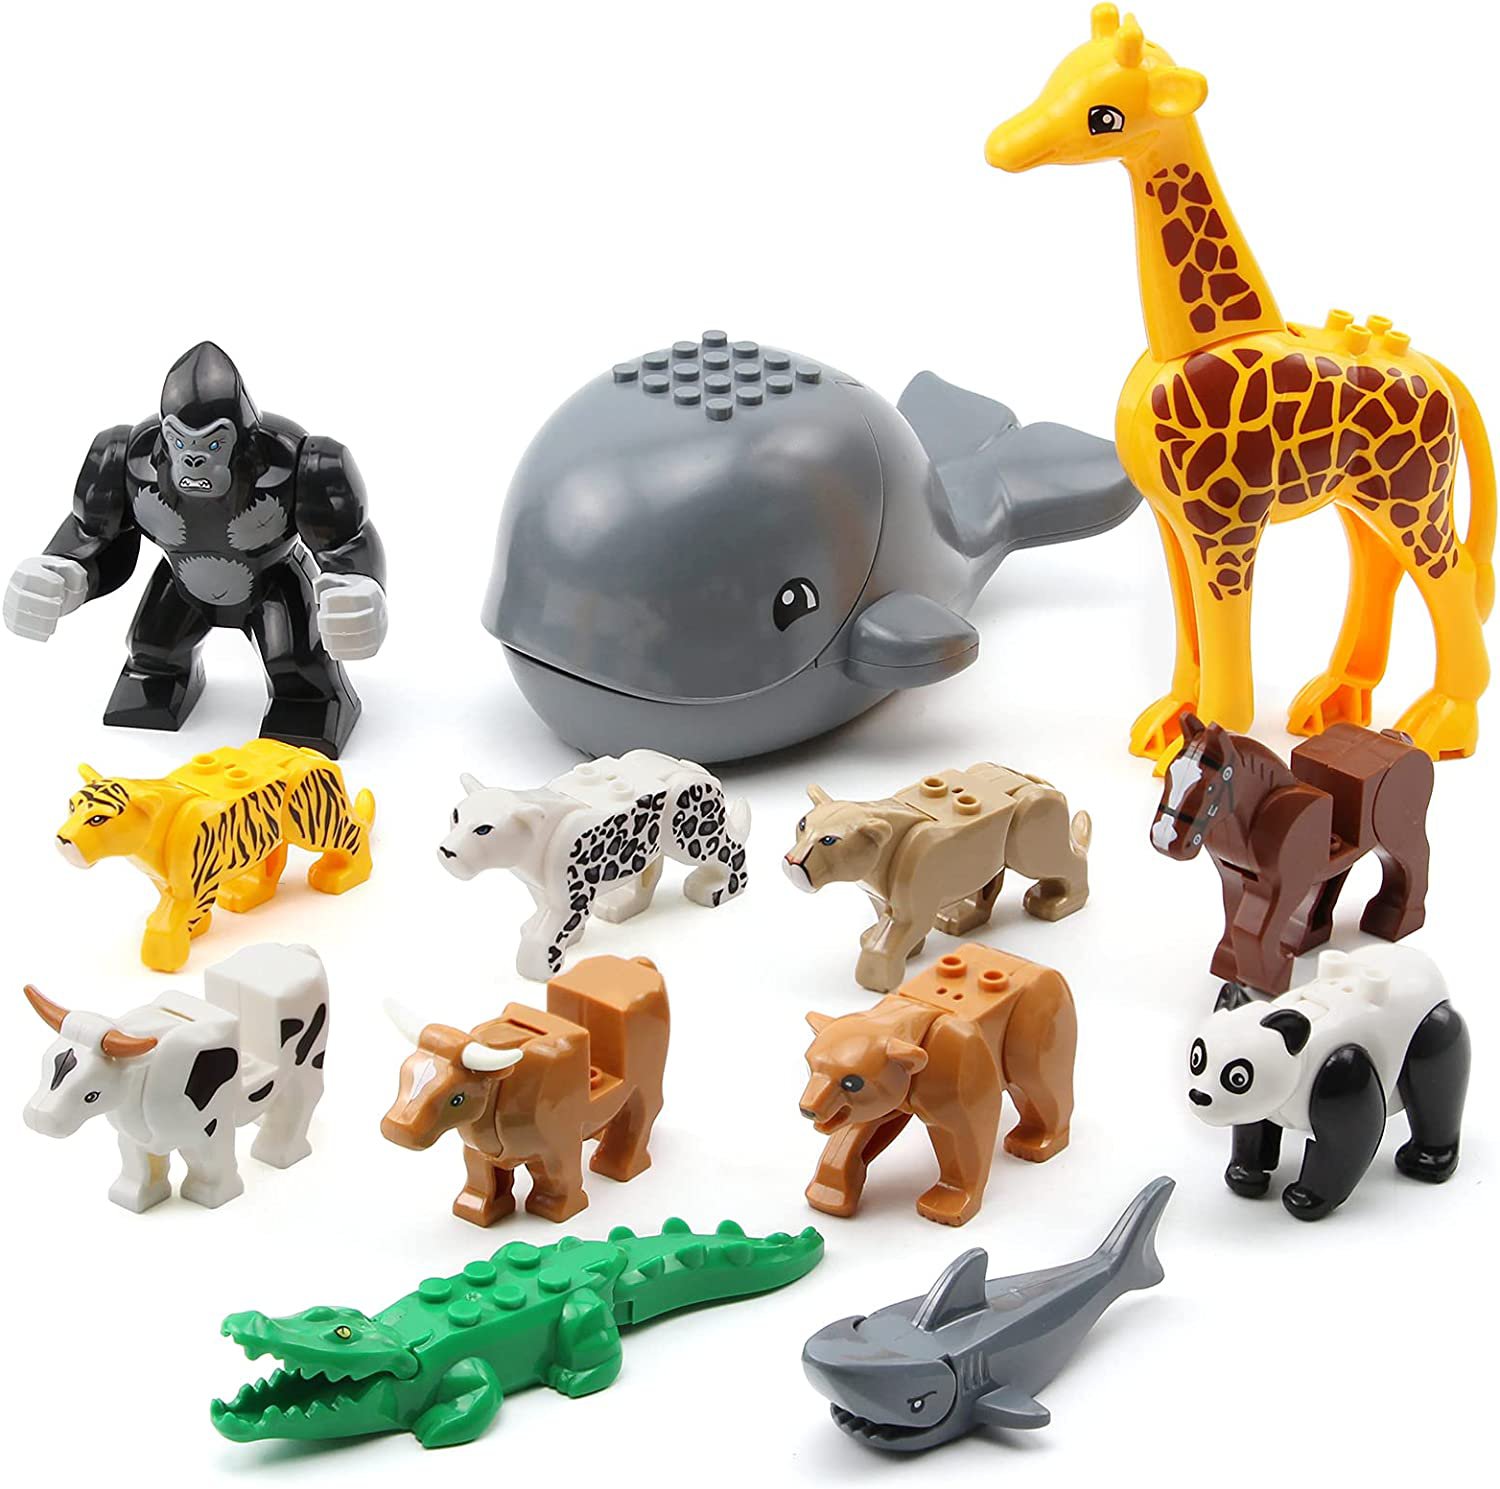 zoo-animals-minifigures-lgeo-compatible-city-zoo-animals-set